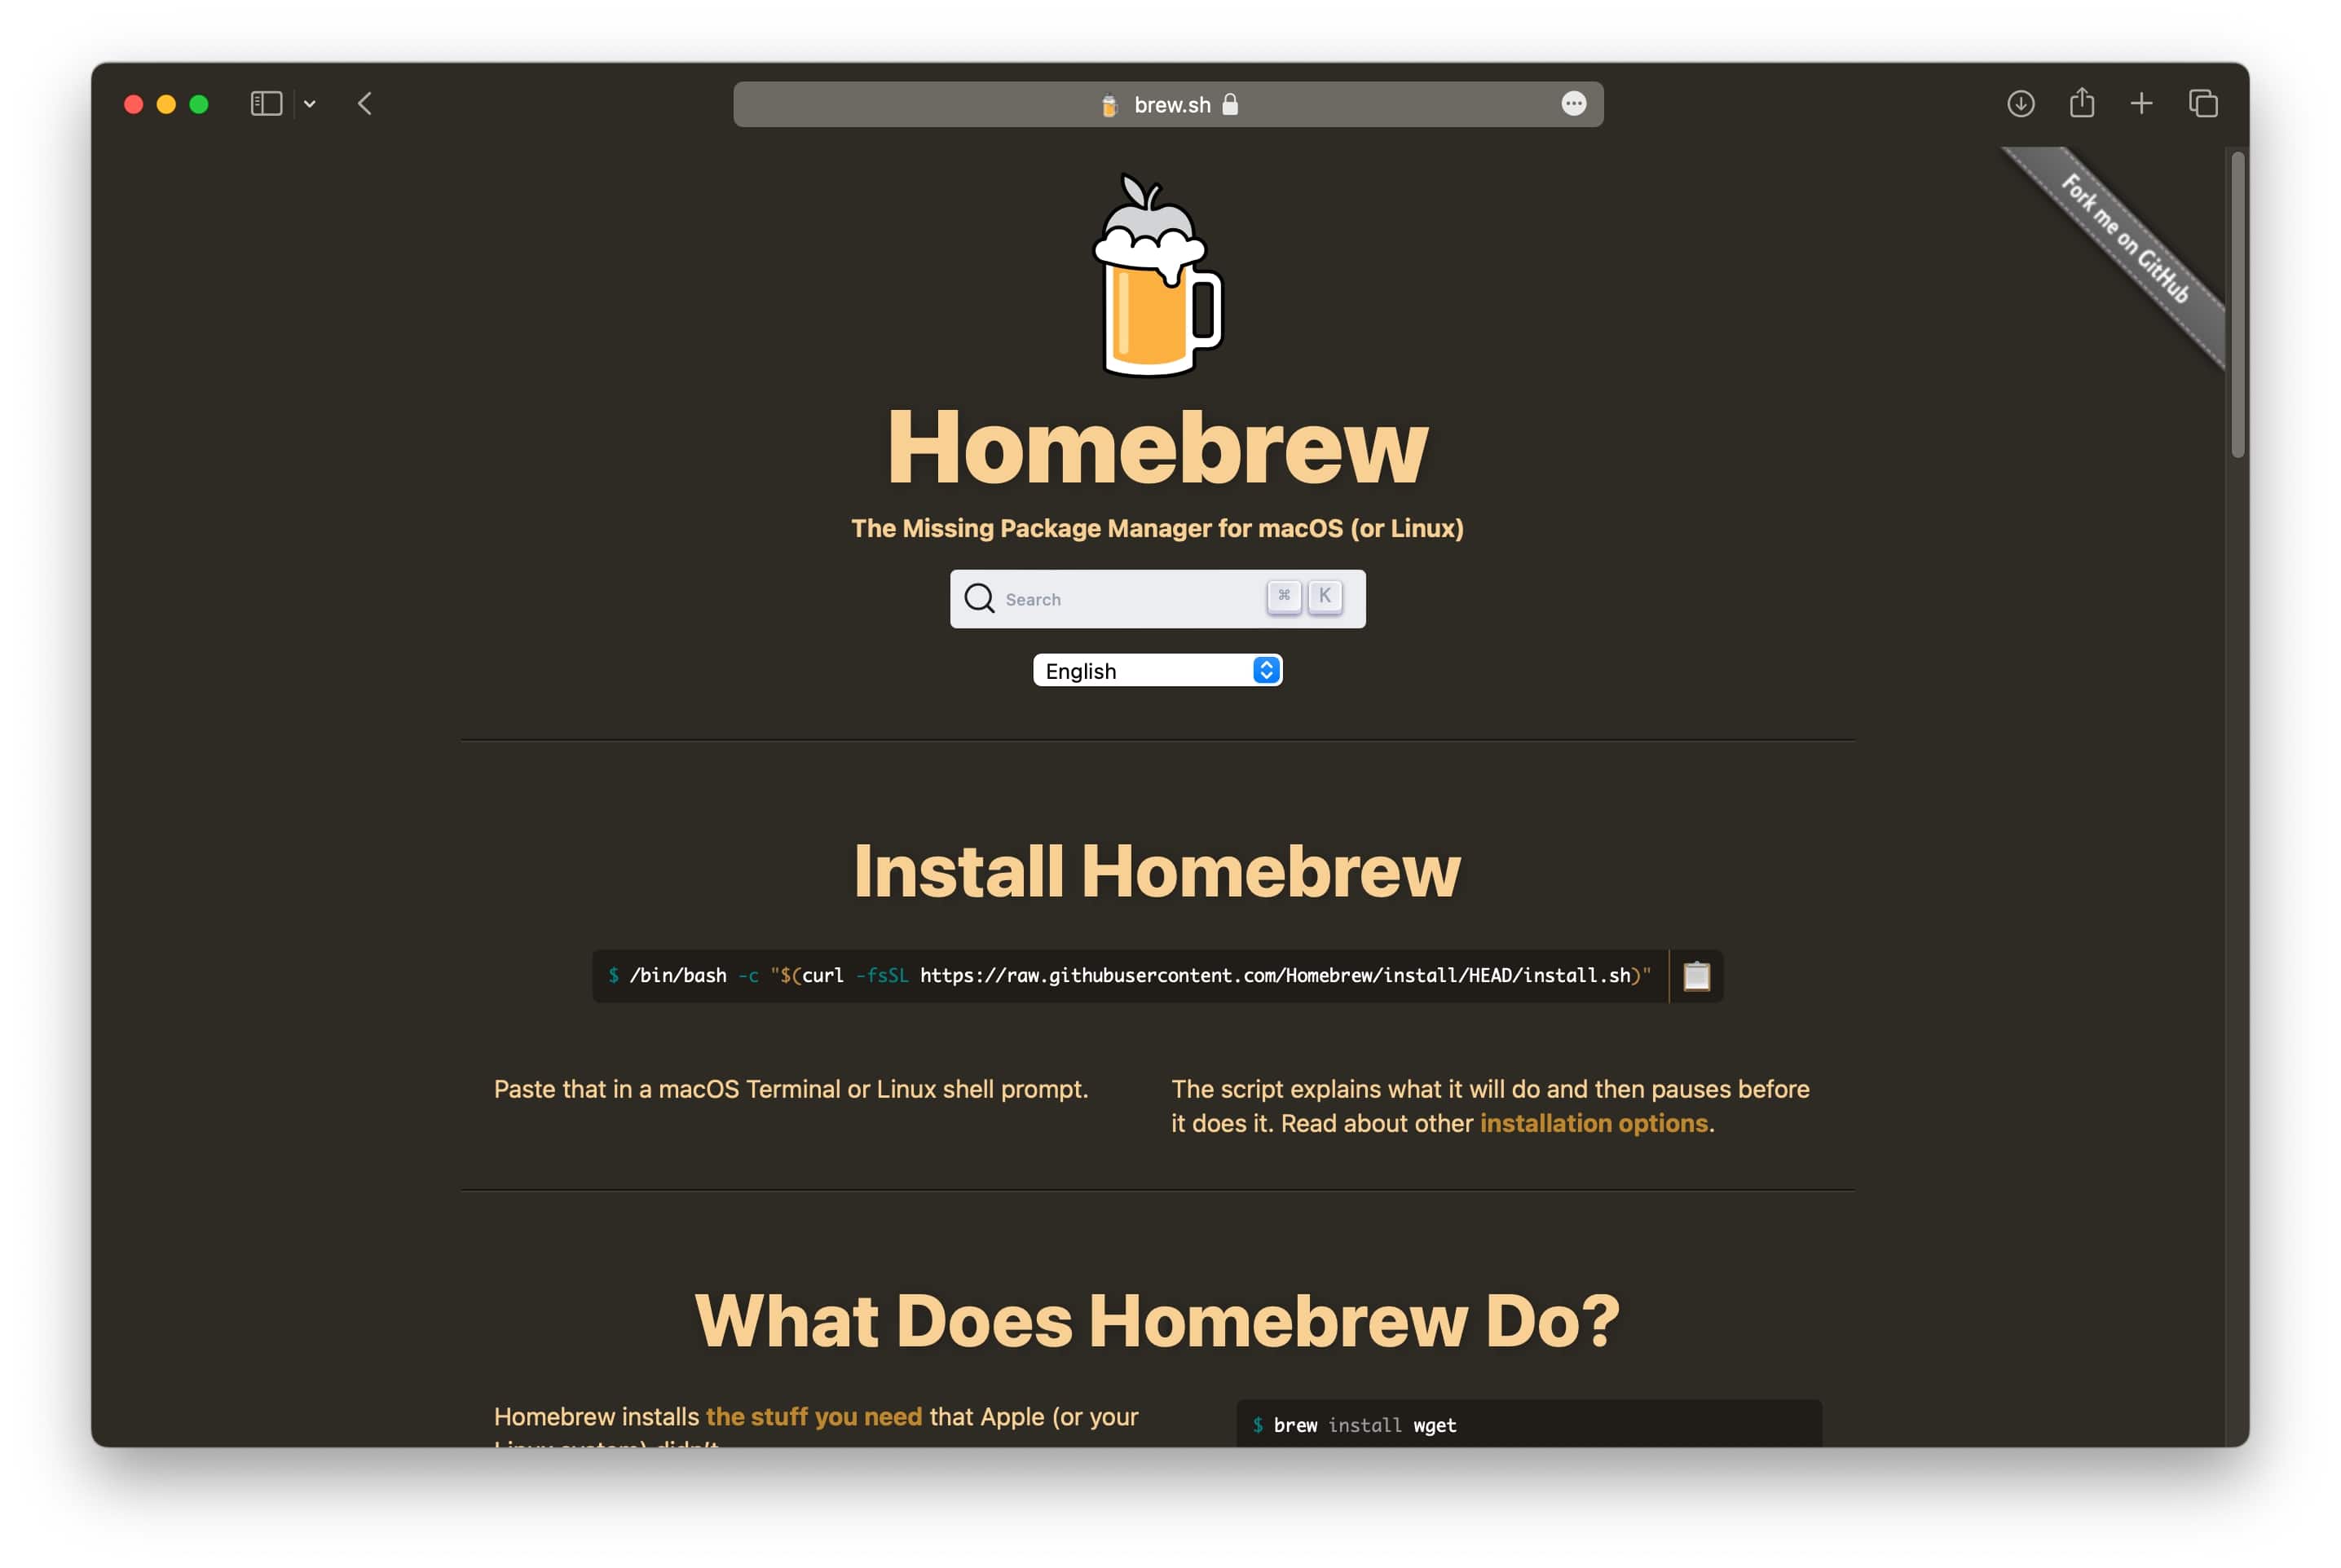 Homebrew's official website